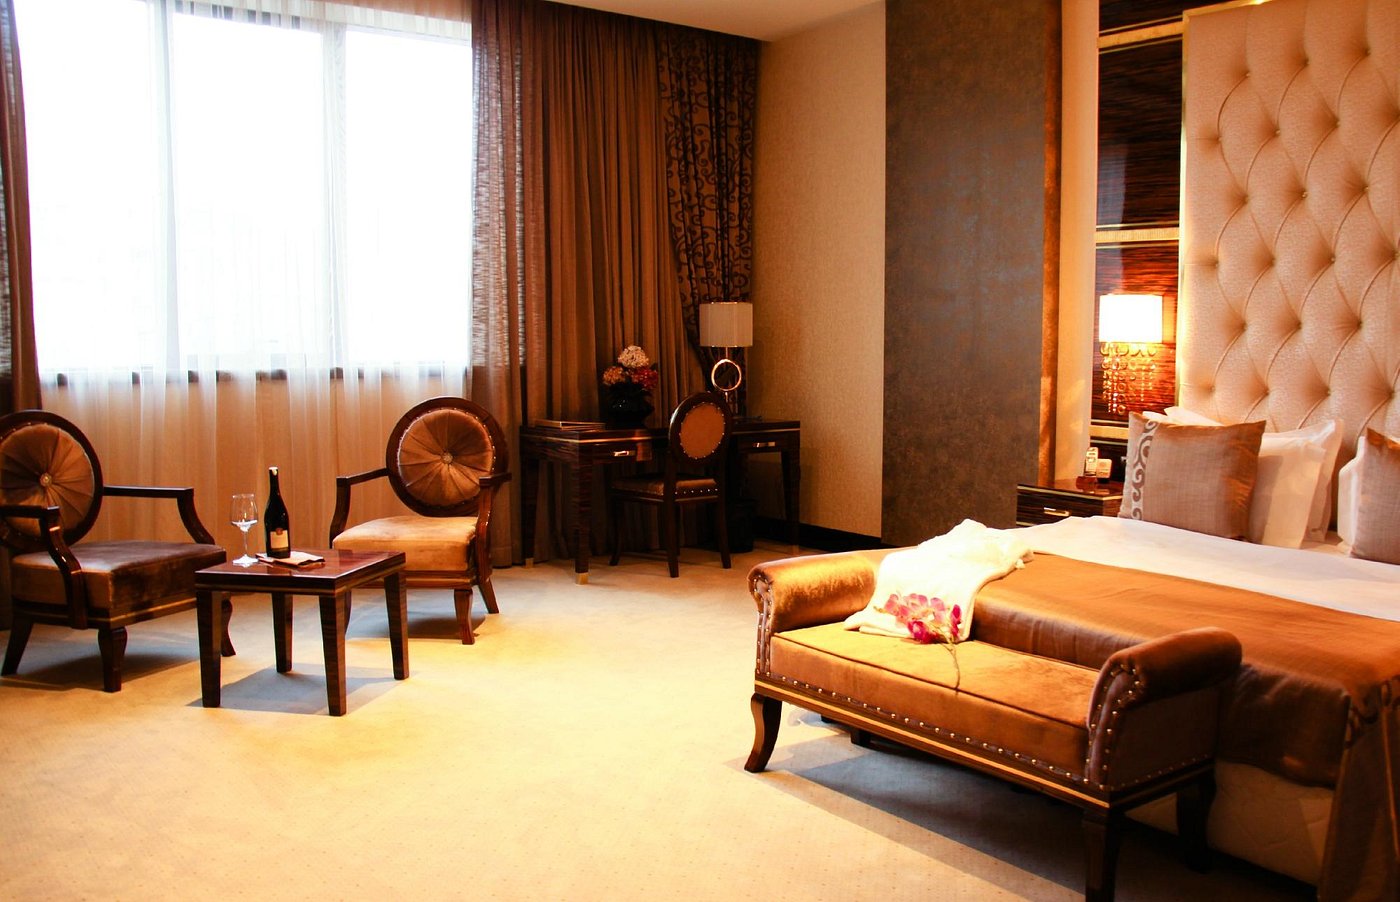 Сапфир баку. INTERCONTINENTAL Hotel Баку Азербайджан. Отель сапфир Баку. Отель Royal Sapphire Баку.